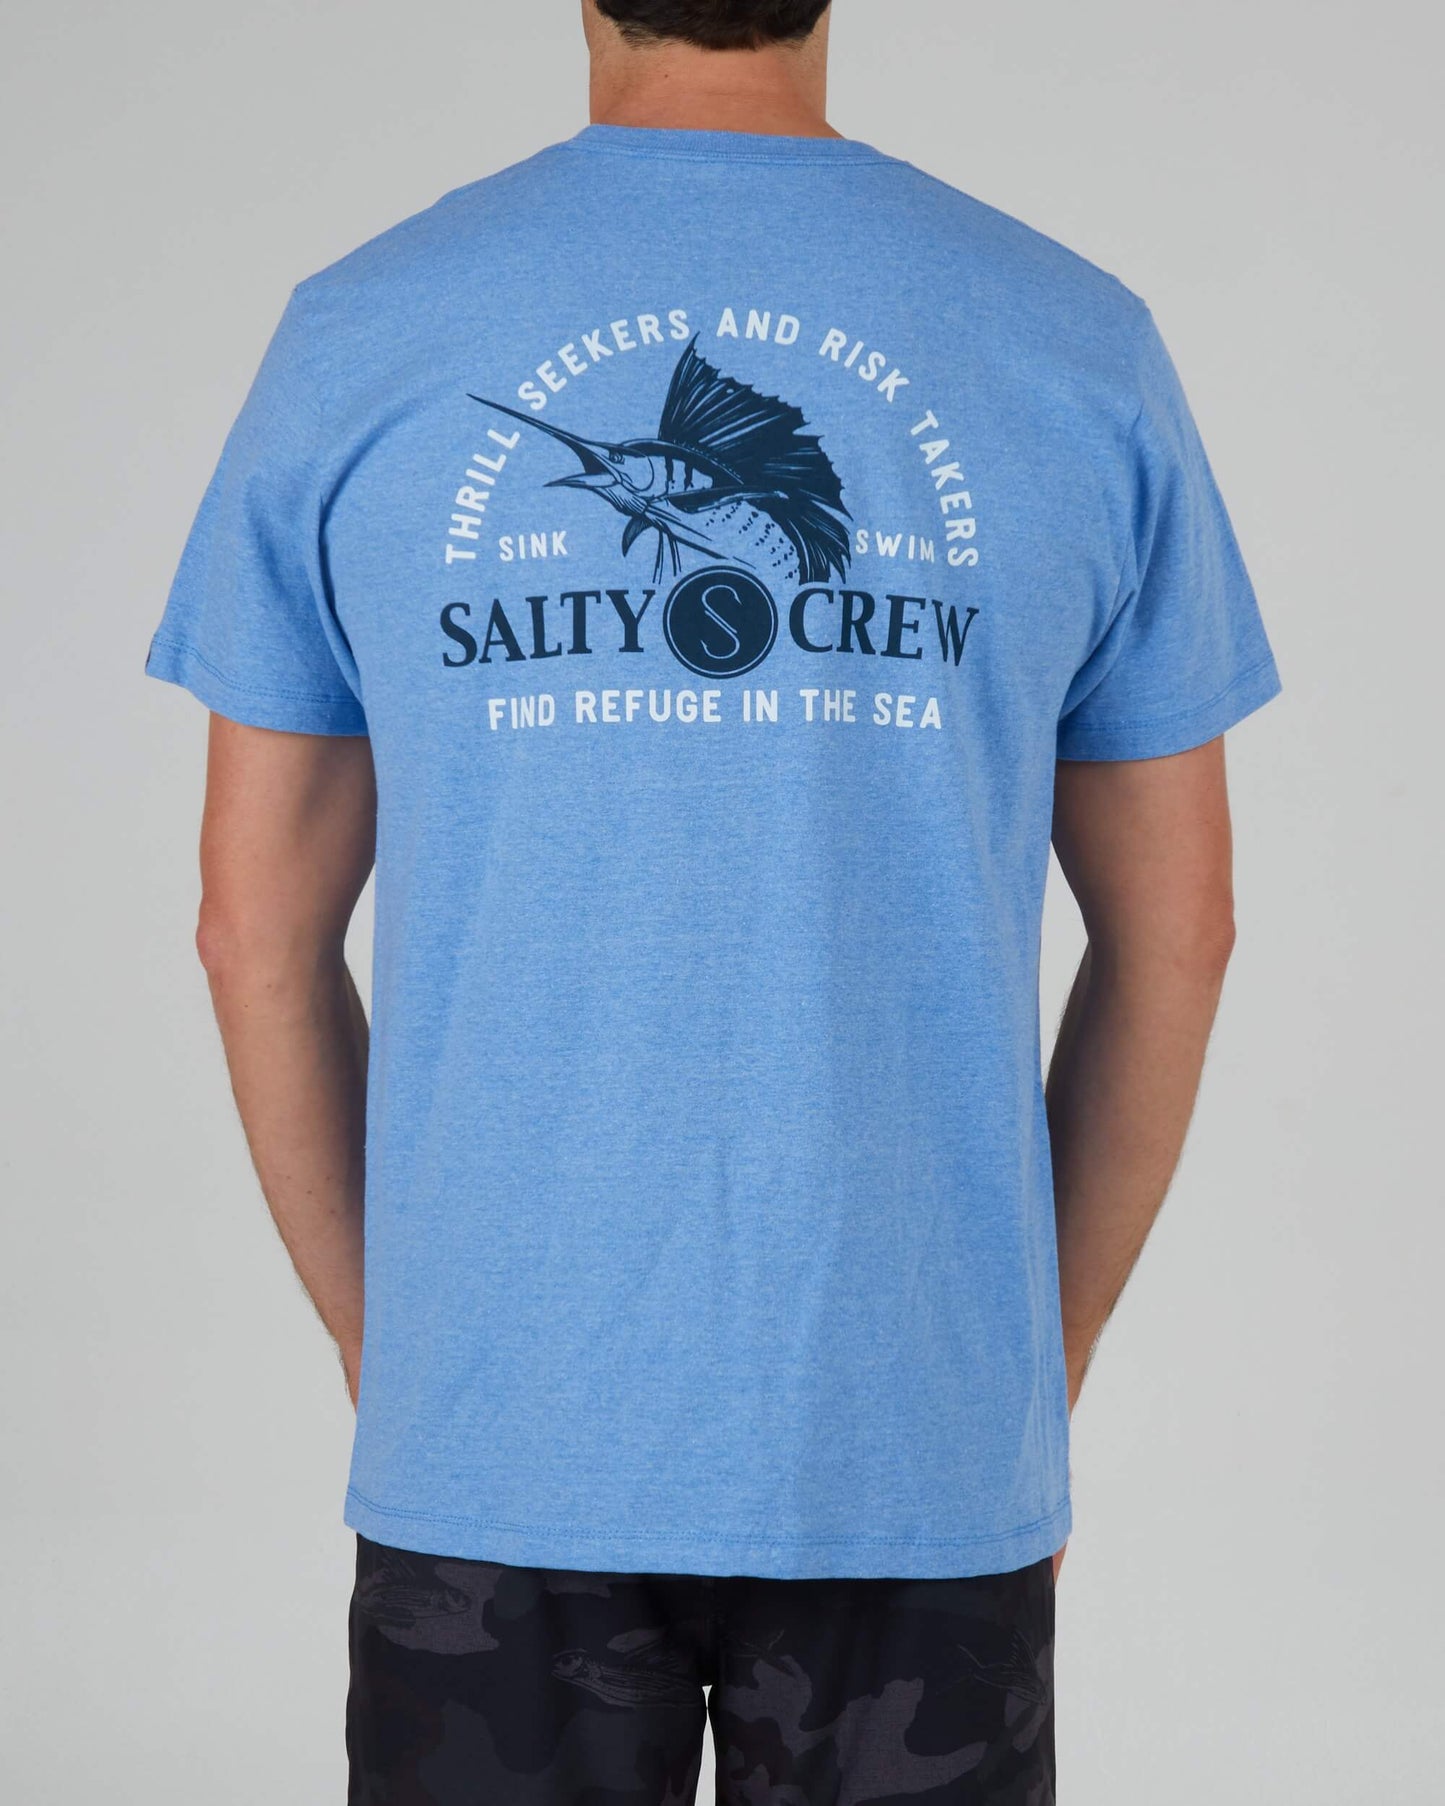 Salty crew T-SHIRTS S/S Yacht Club Standard S/S Tee - Light Blue Heather in LIGHT BLUE HEATHER